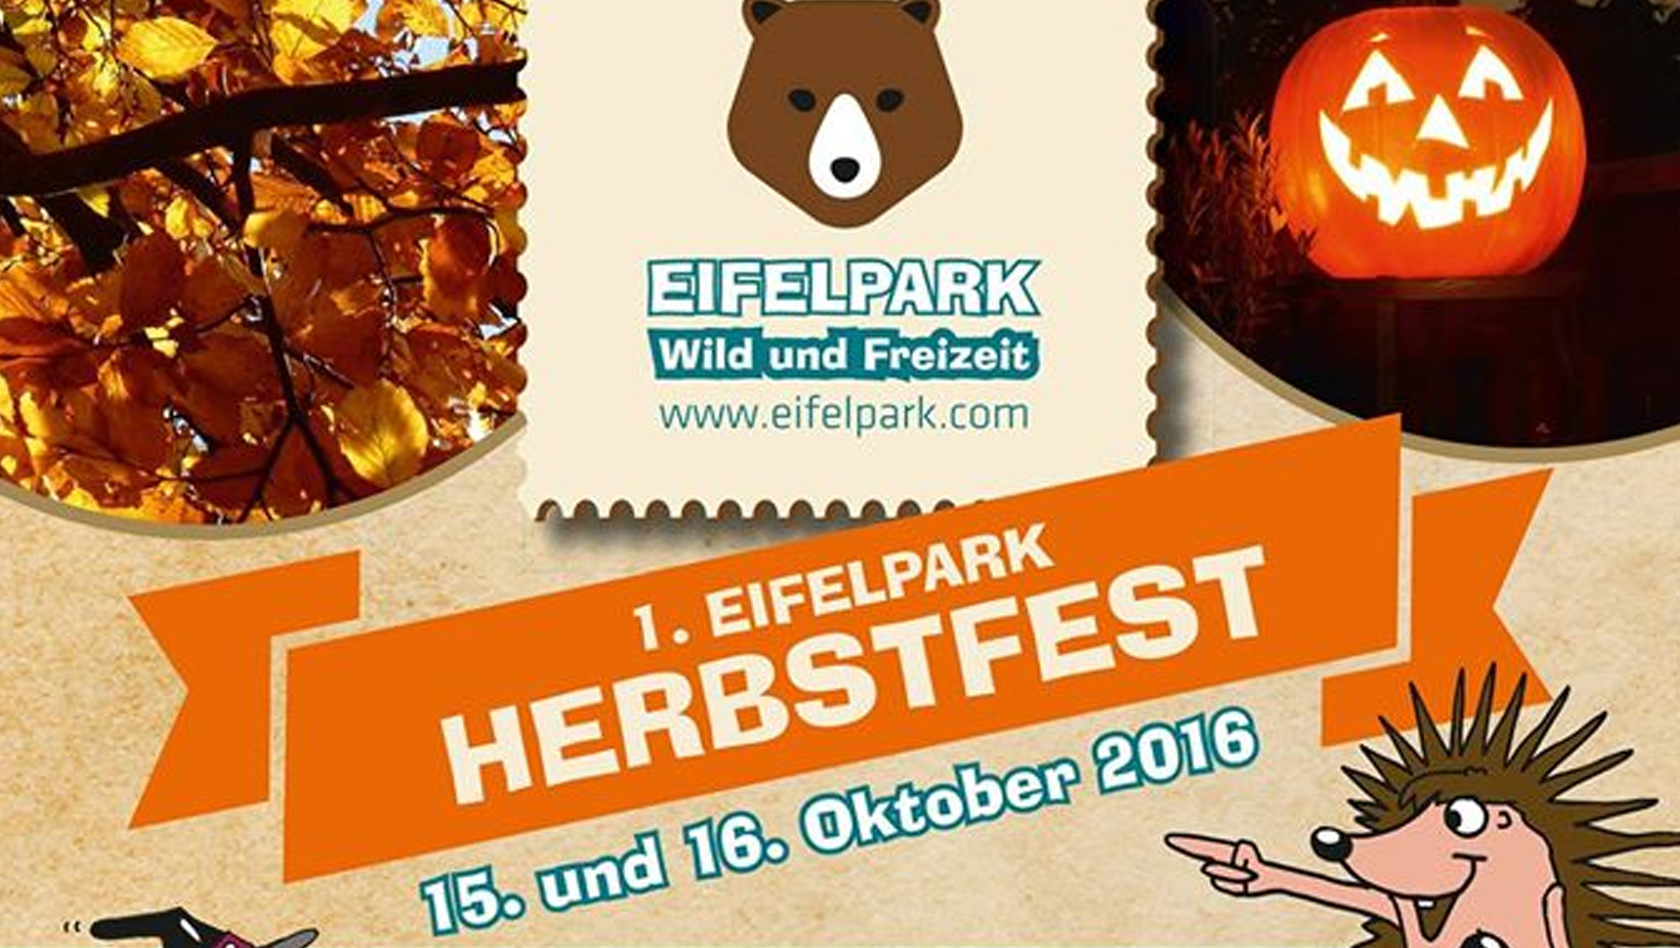 Eifelpark Gondorf Herbstfest 2016 - Ankündigung